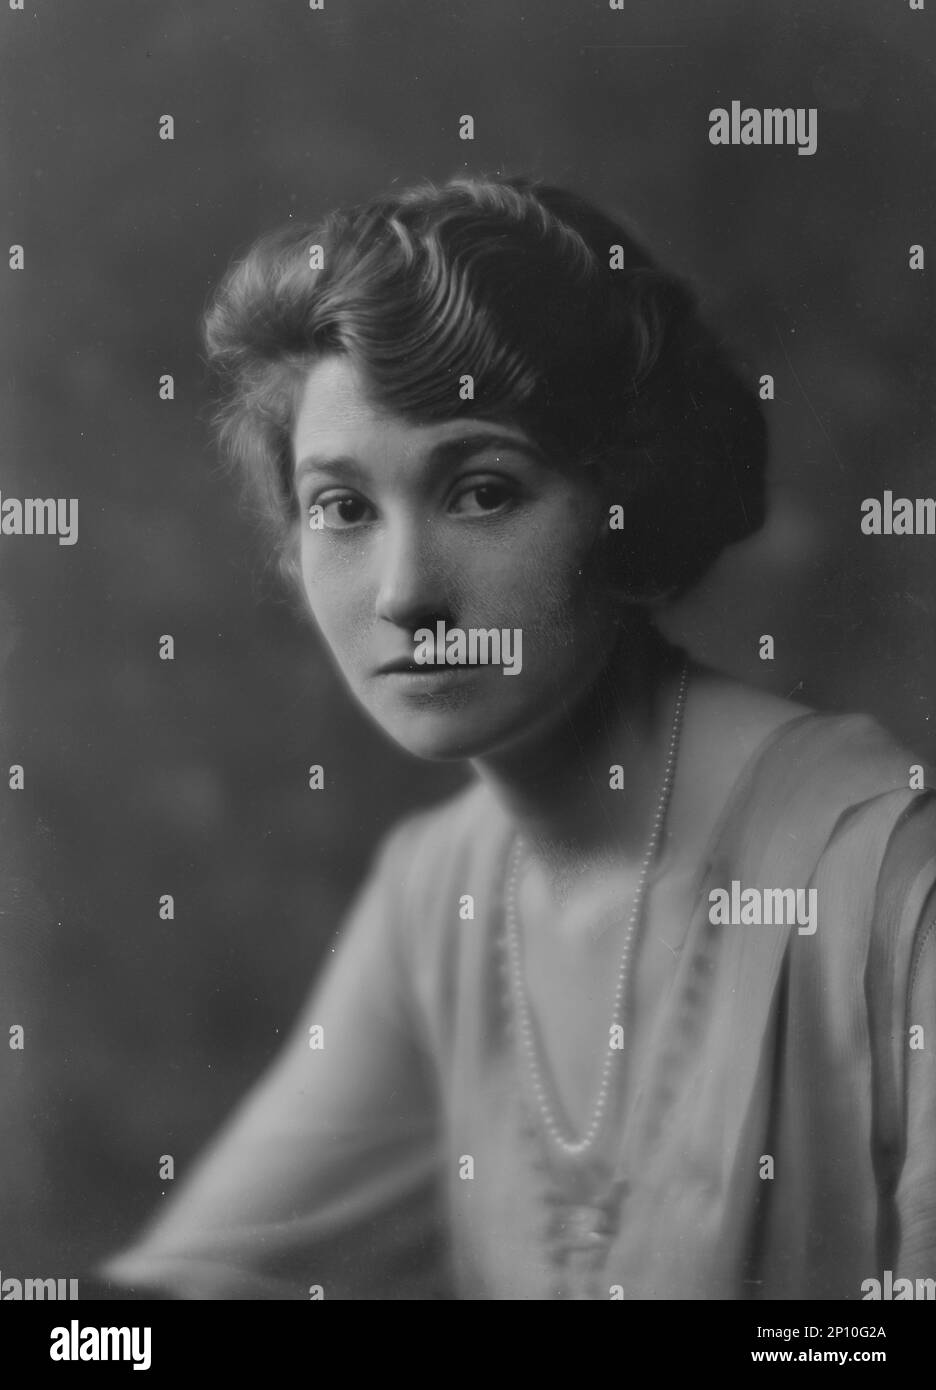 Bainter, Fay, Miss, portrait photograph, 1916. Stock Photo